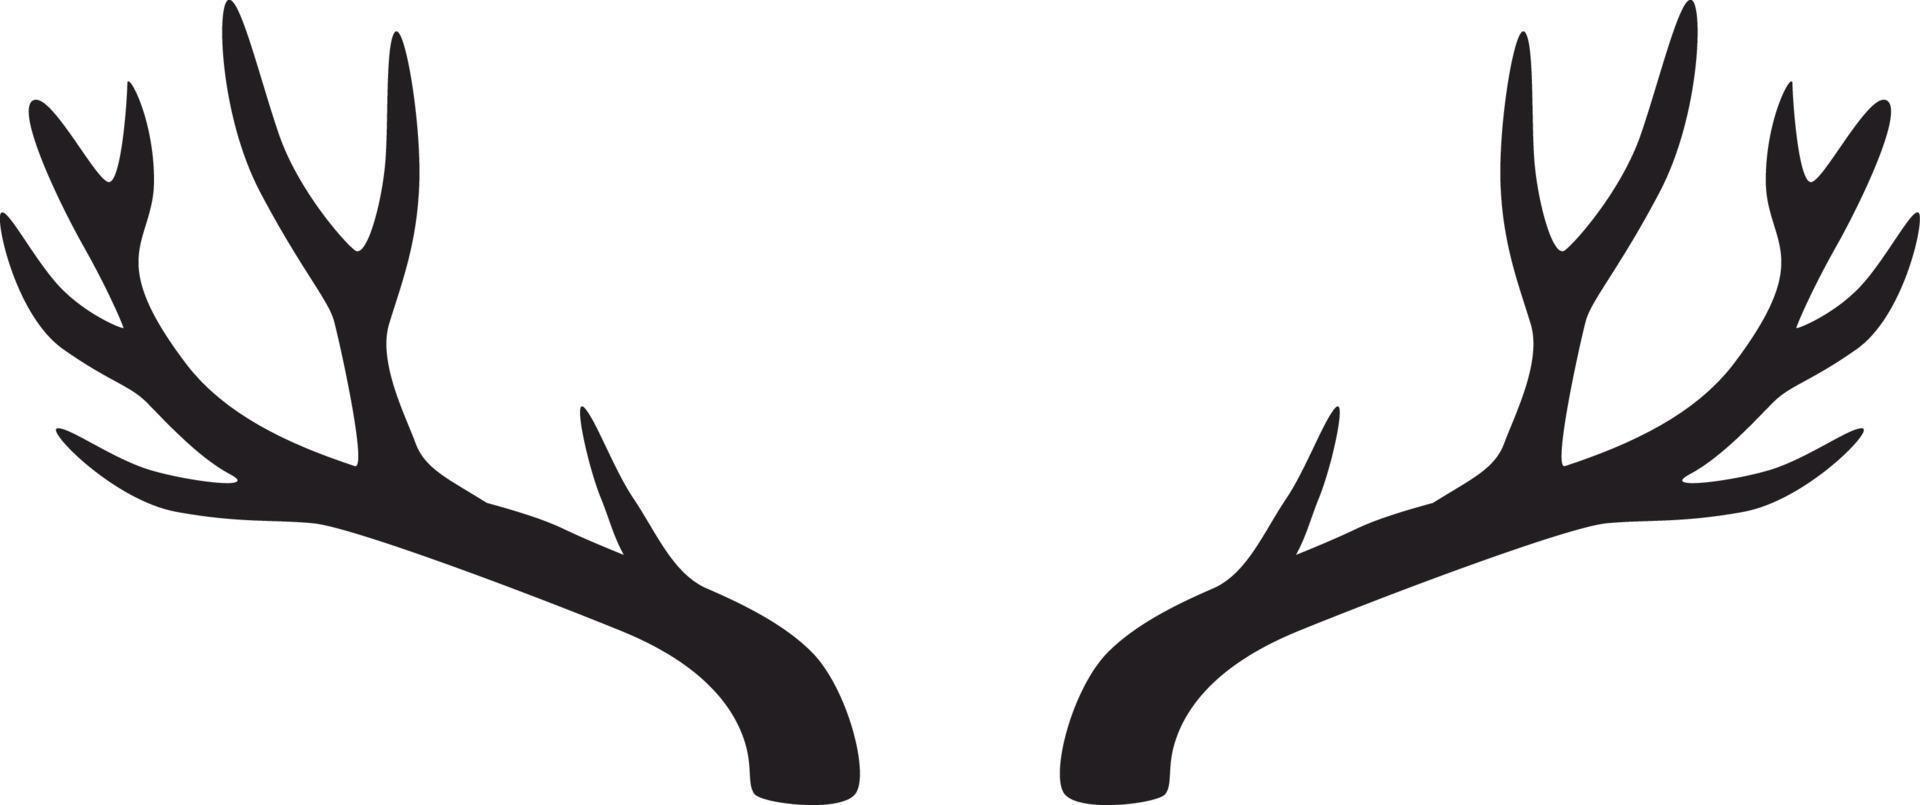 Illustration animal horns silhouettes vector